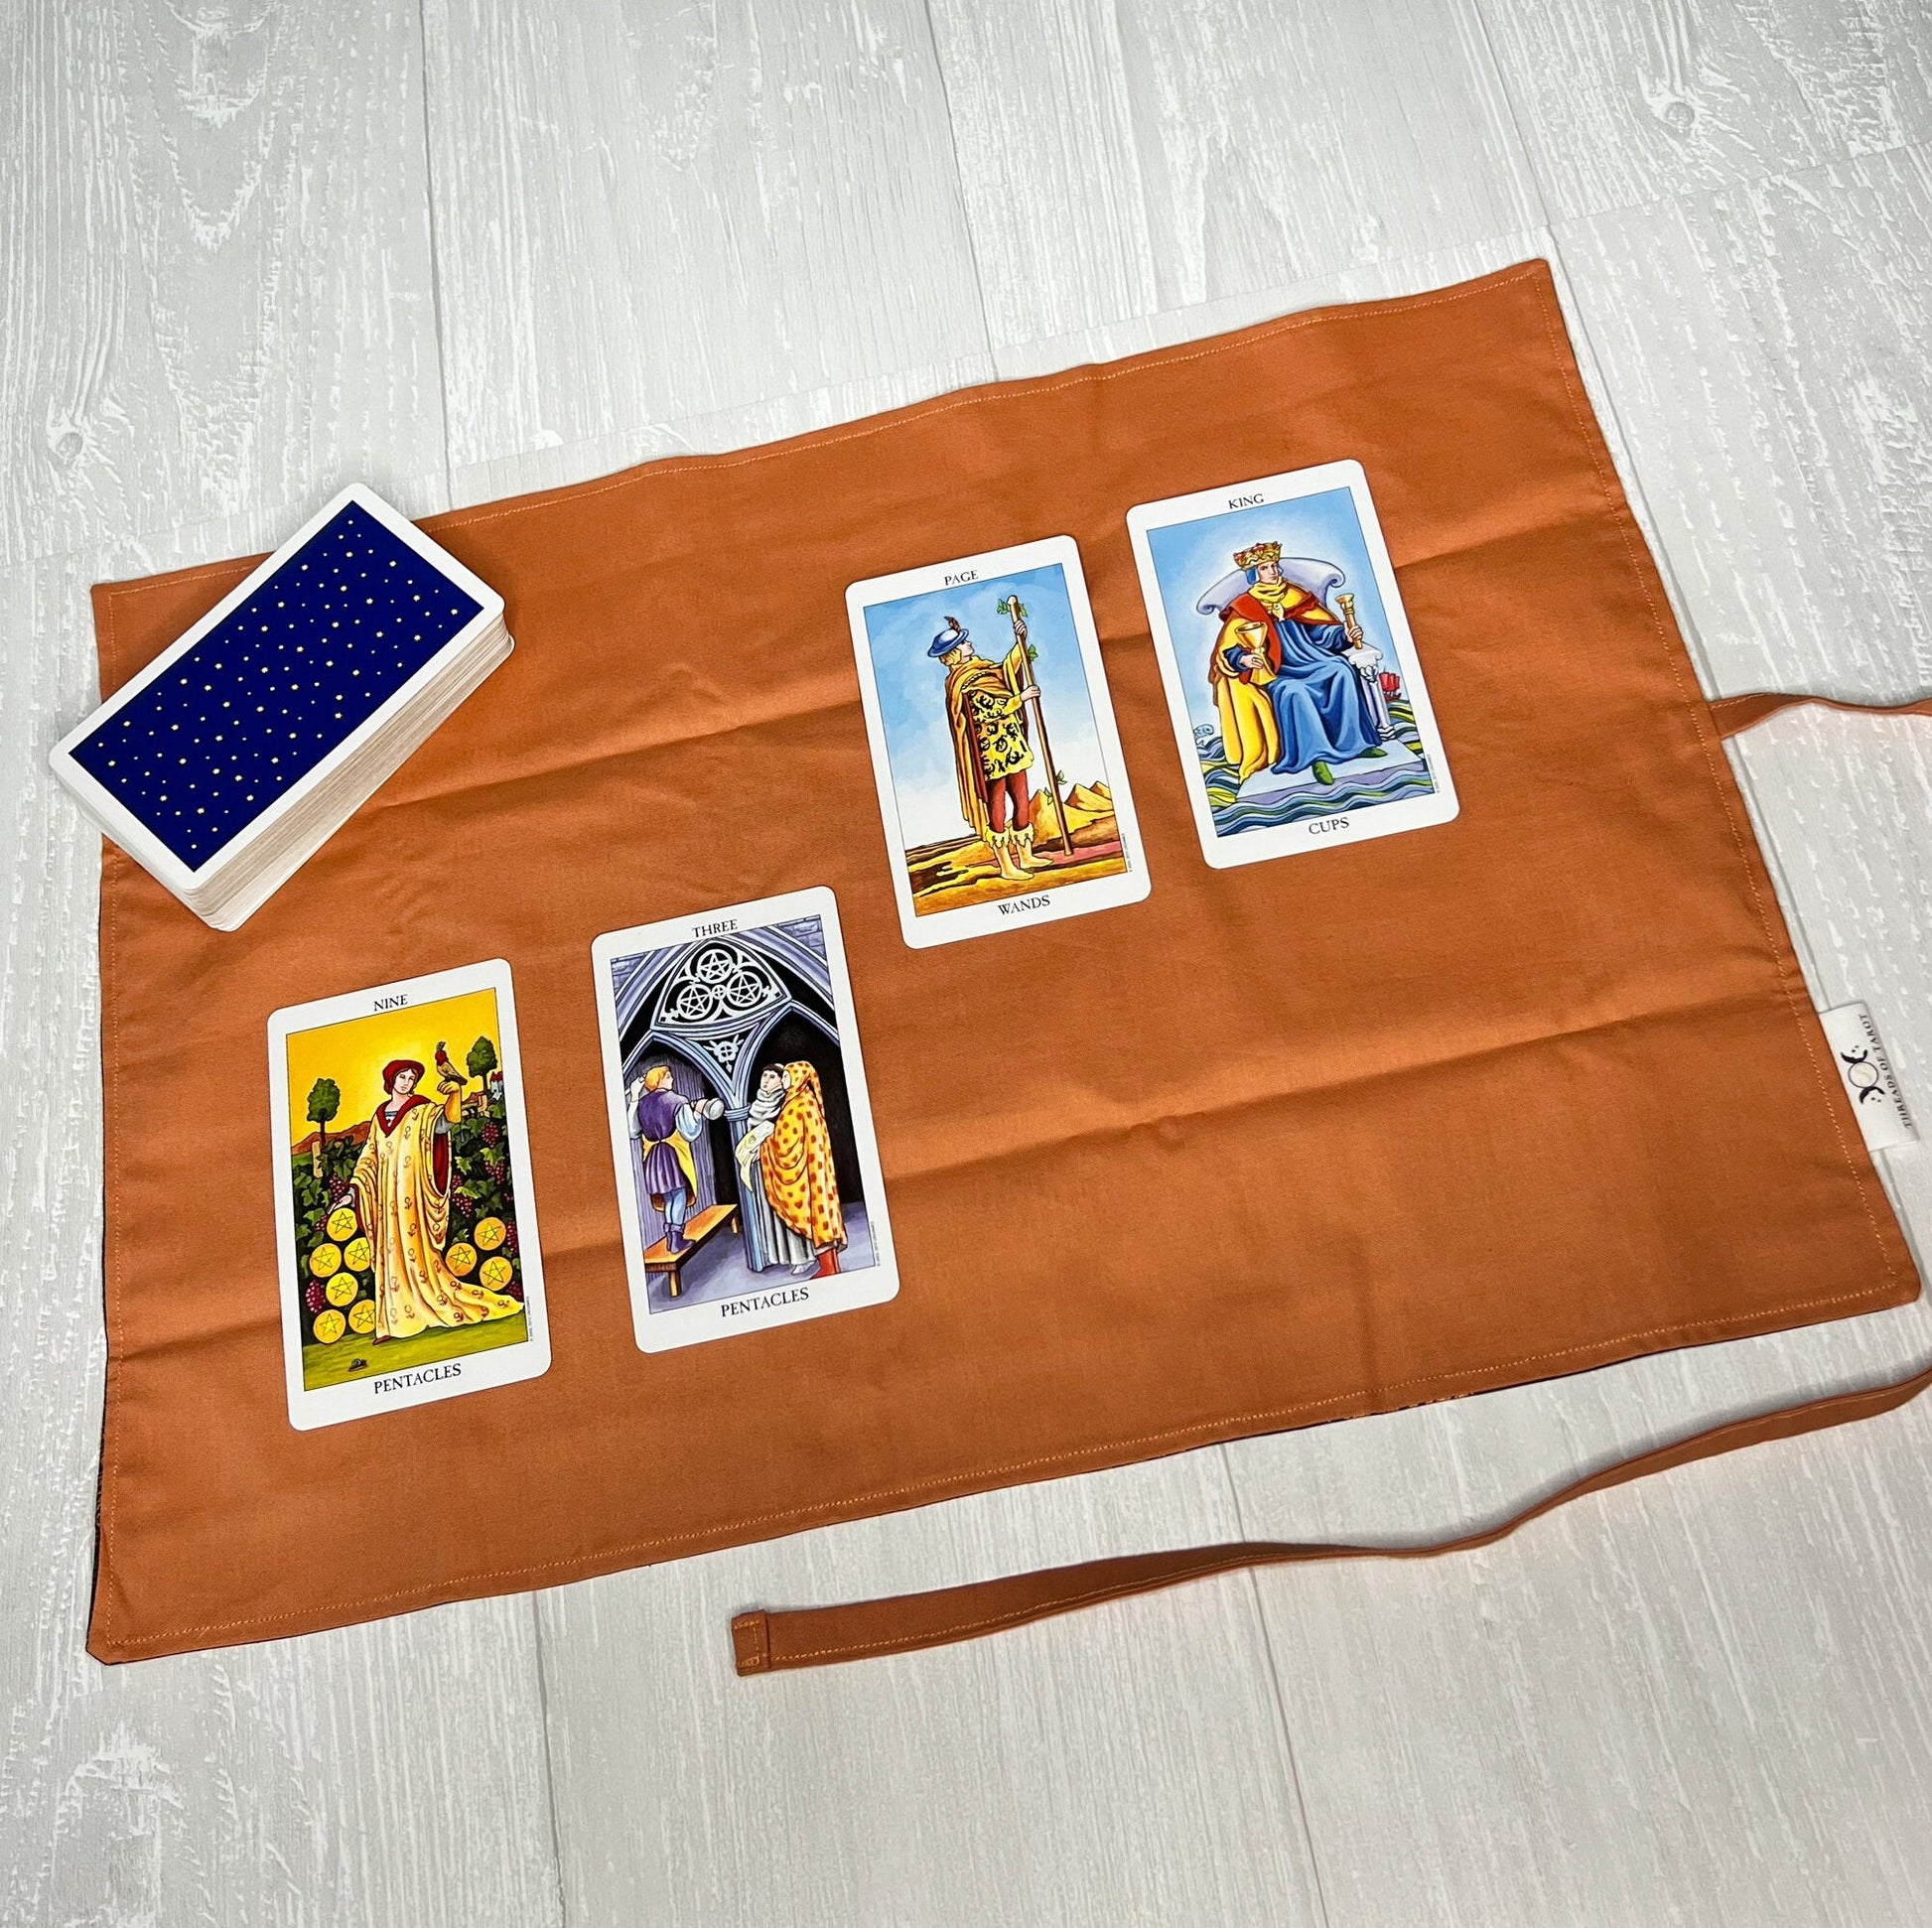 Gray & Copper Moth Tarot Wrap, Tarot Deck Storage Cloth, Tarot Card Holder, Pagan Witchcraft Wiccan Divination Supplies, Tarot Accessories